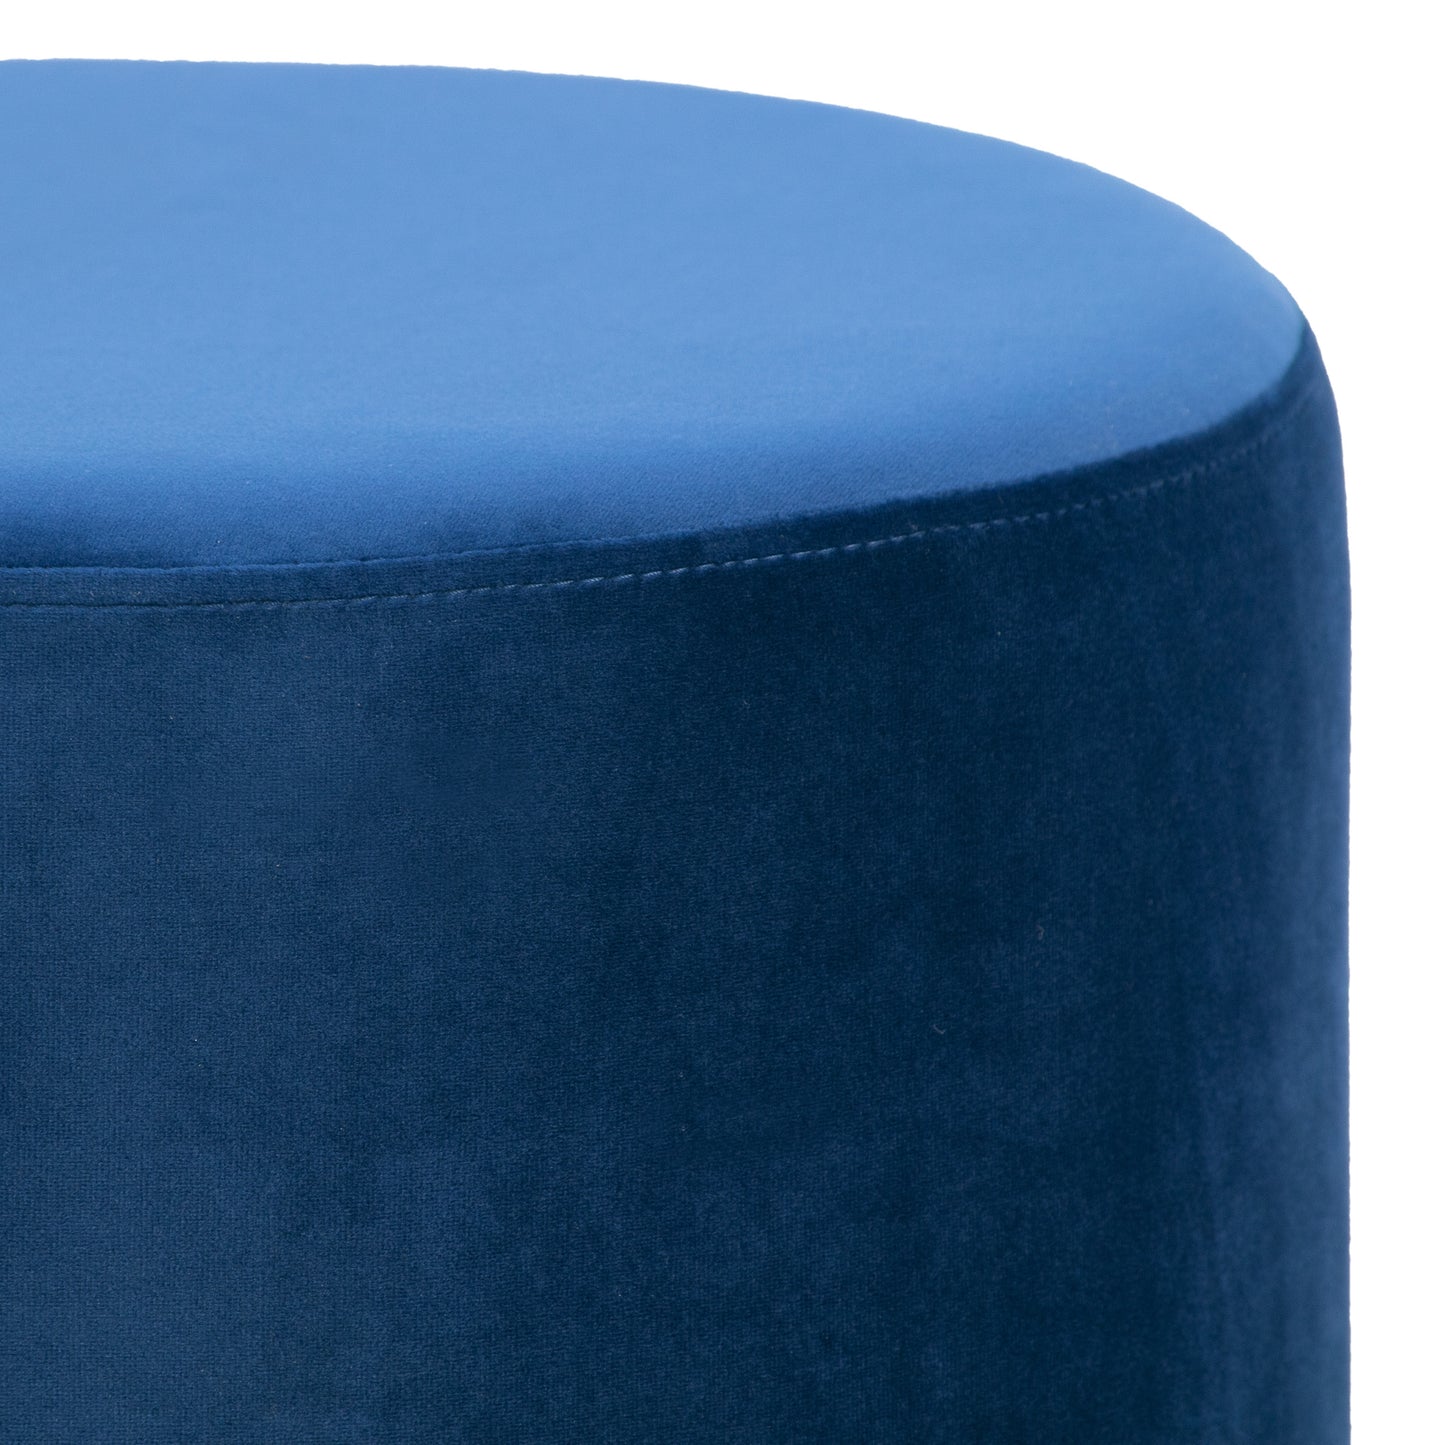 Anna Blue Velvet Round Footstool Ottoman with Golden Accent Base Medium Size